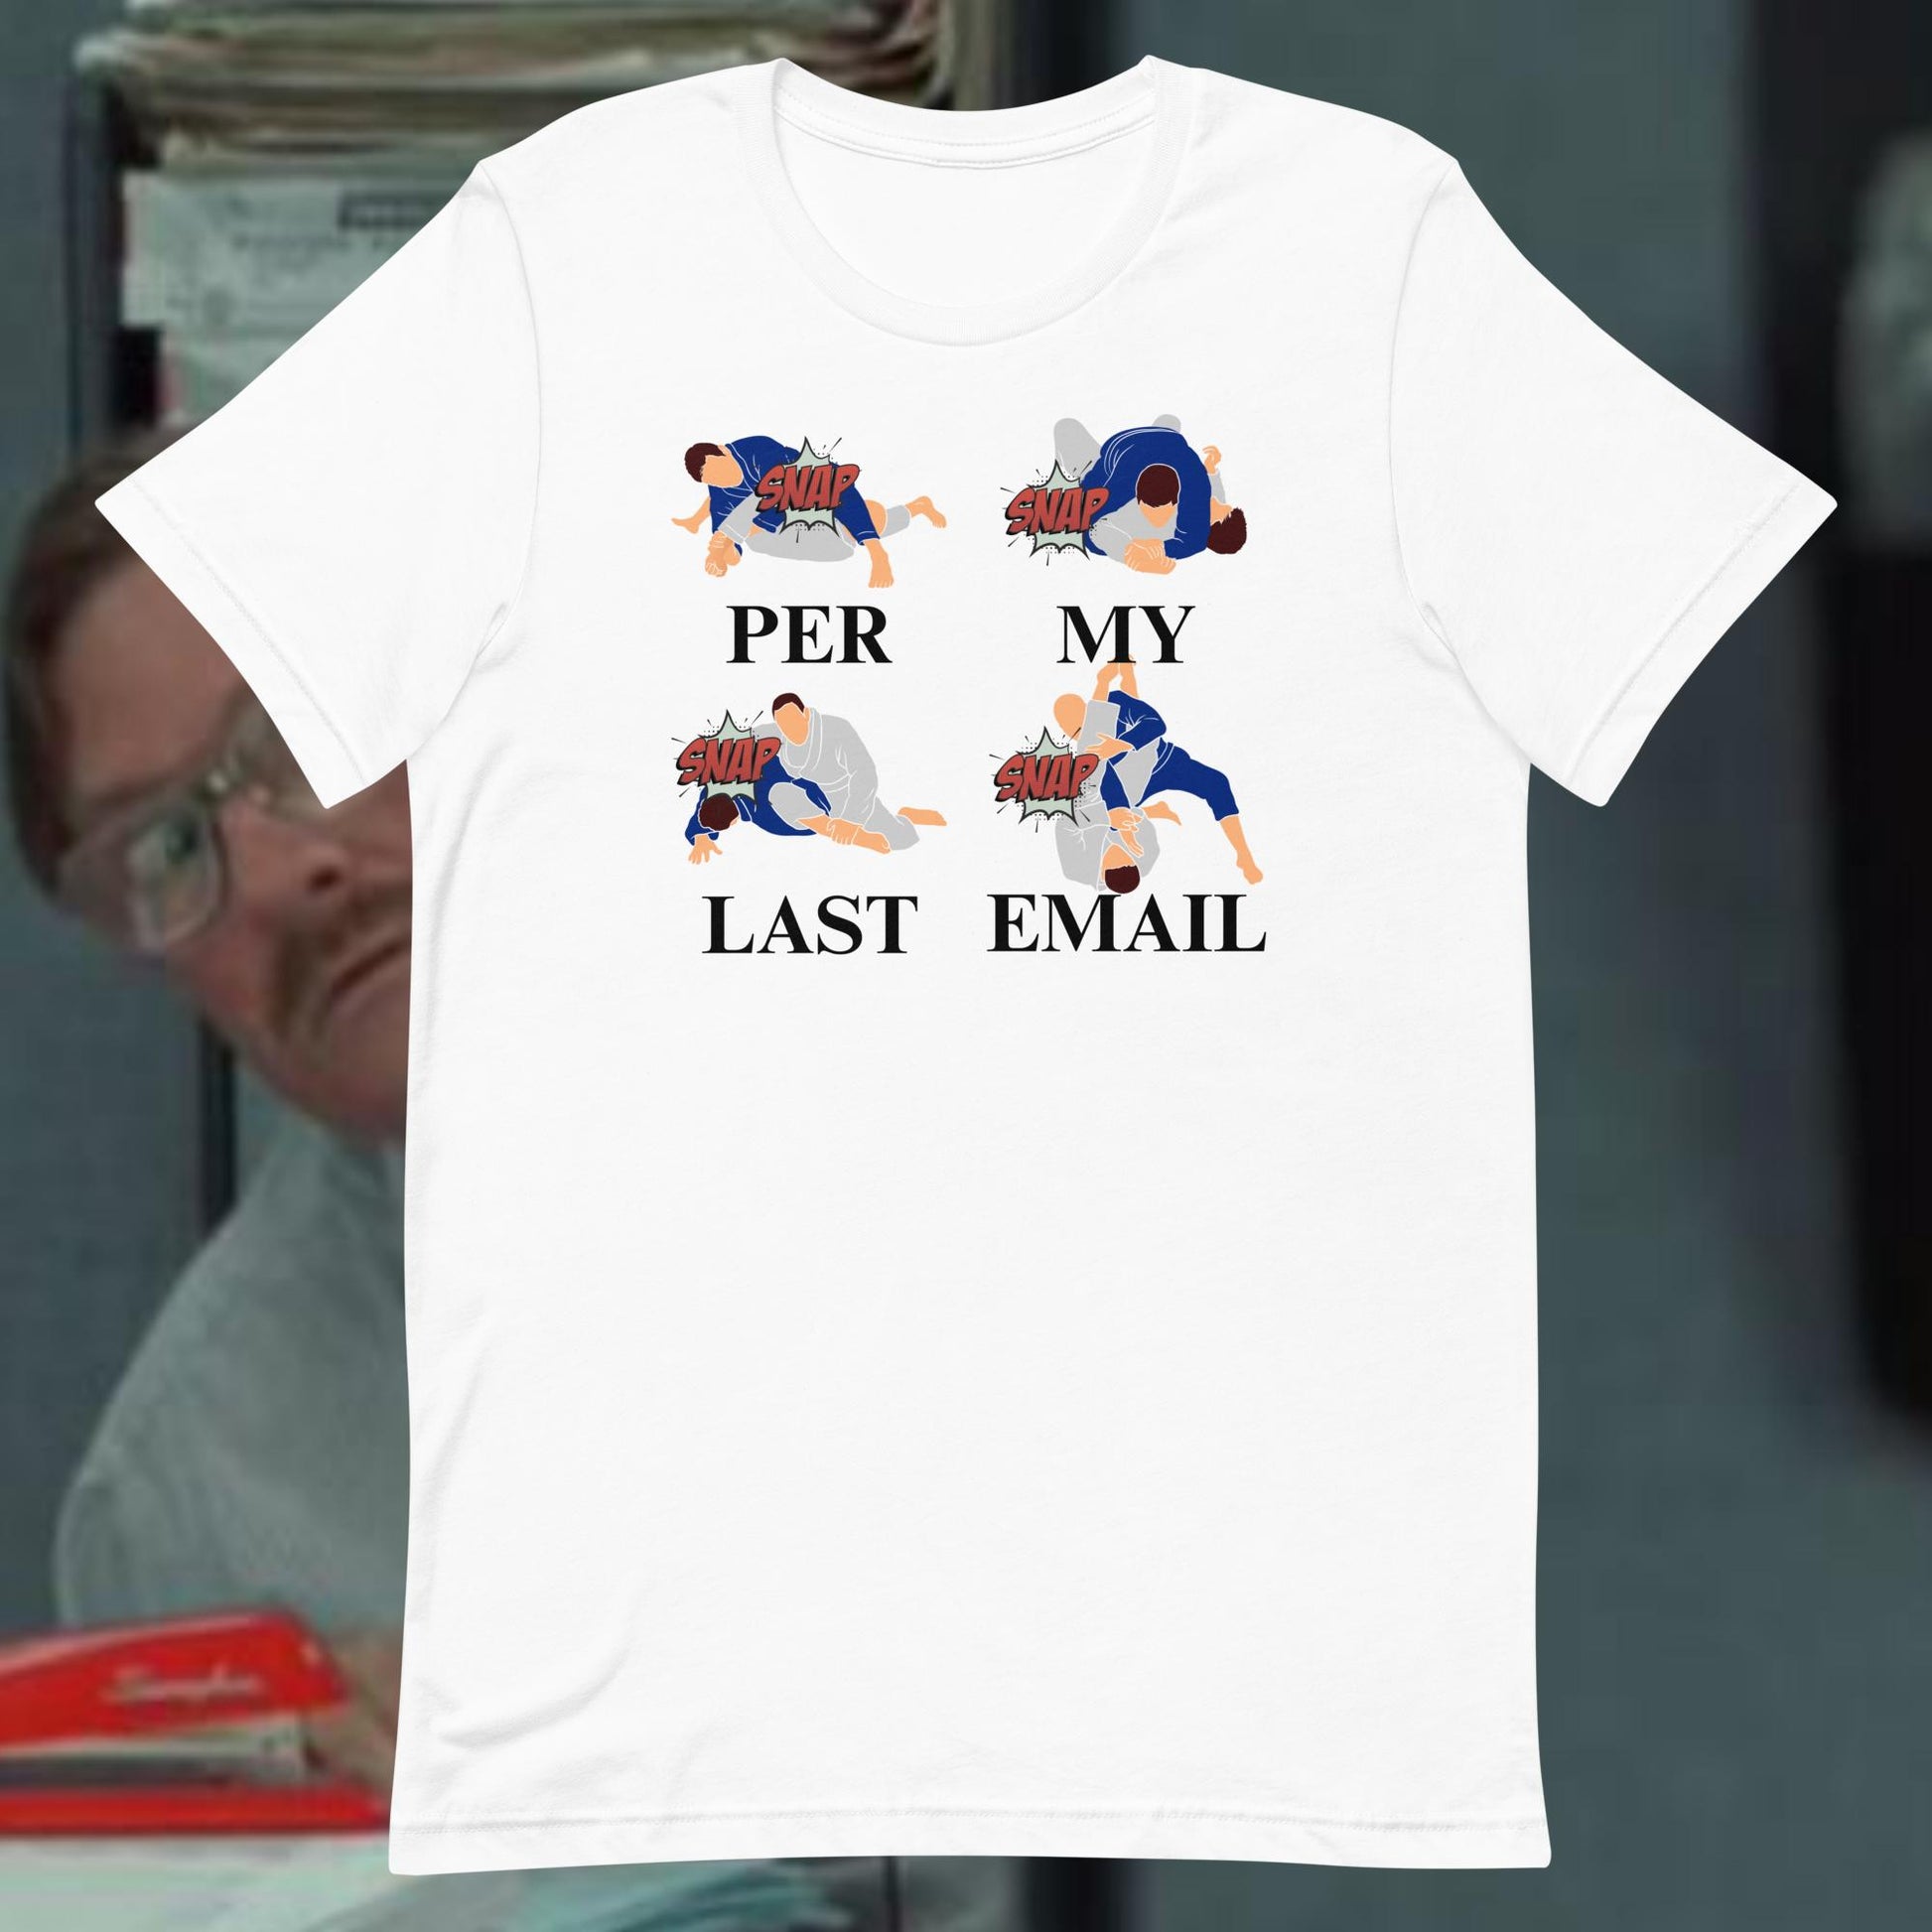 Per...My...Last...Email Passive Aggressive Jiu Jitsu Shirt - BJJ Swag